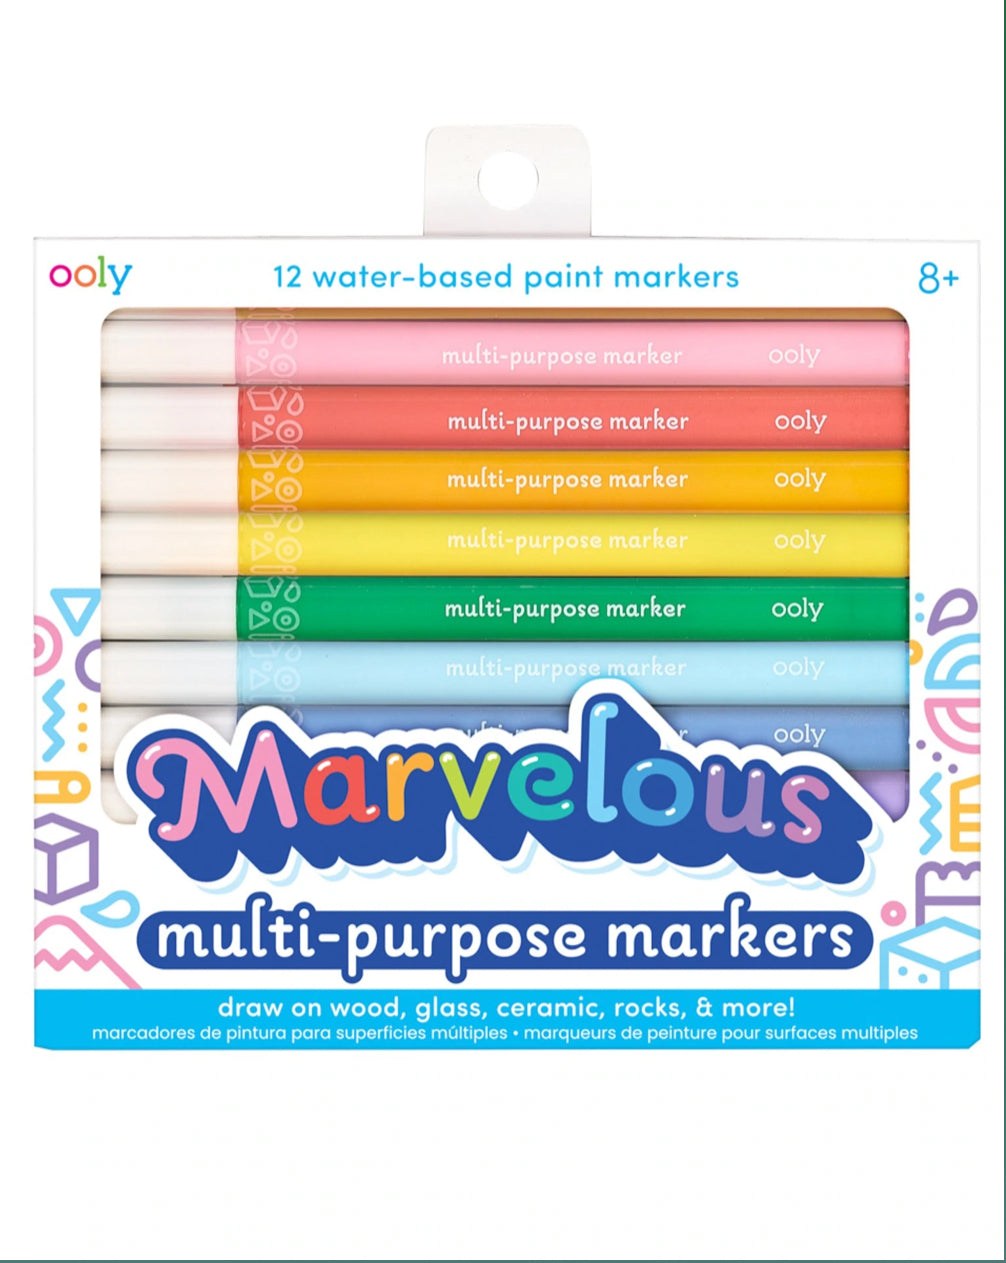 * Marvelous Mutli Purpose Paint Marker